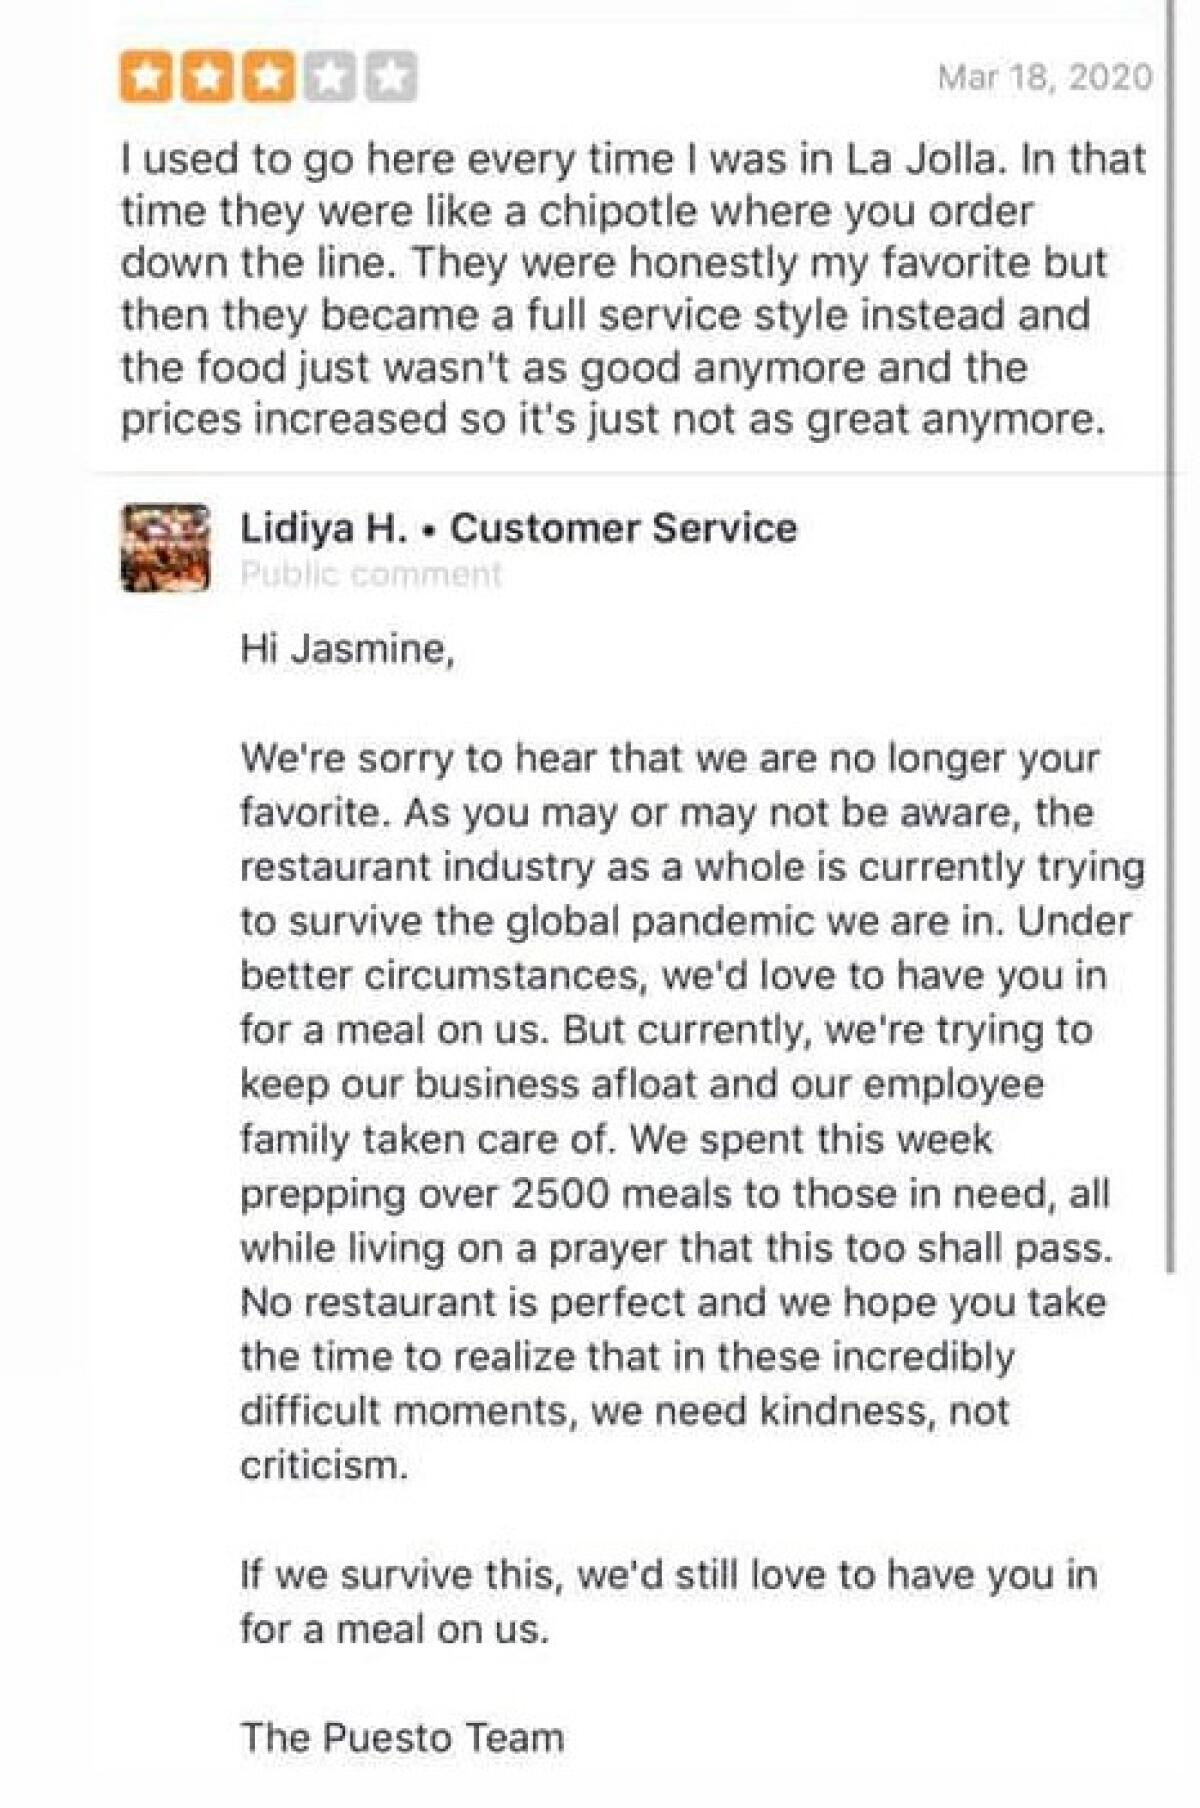 A negative Yelp review of Puesto restaurant in La Jolla 